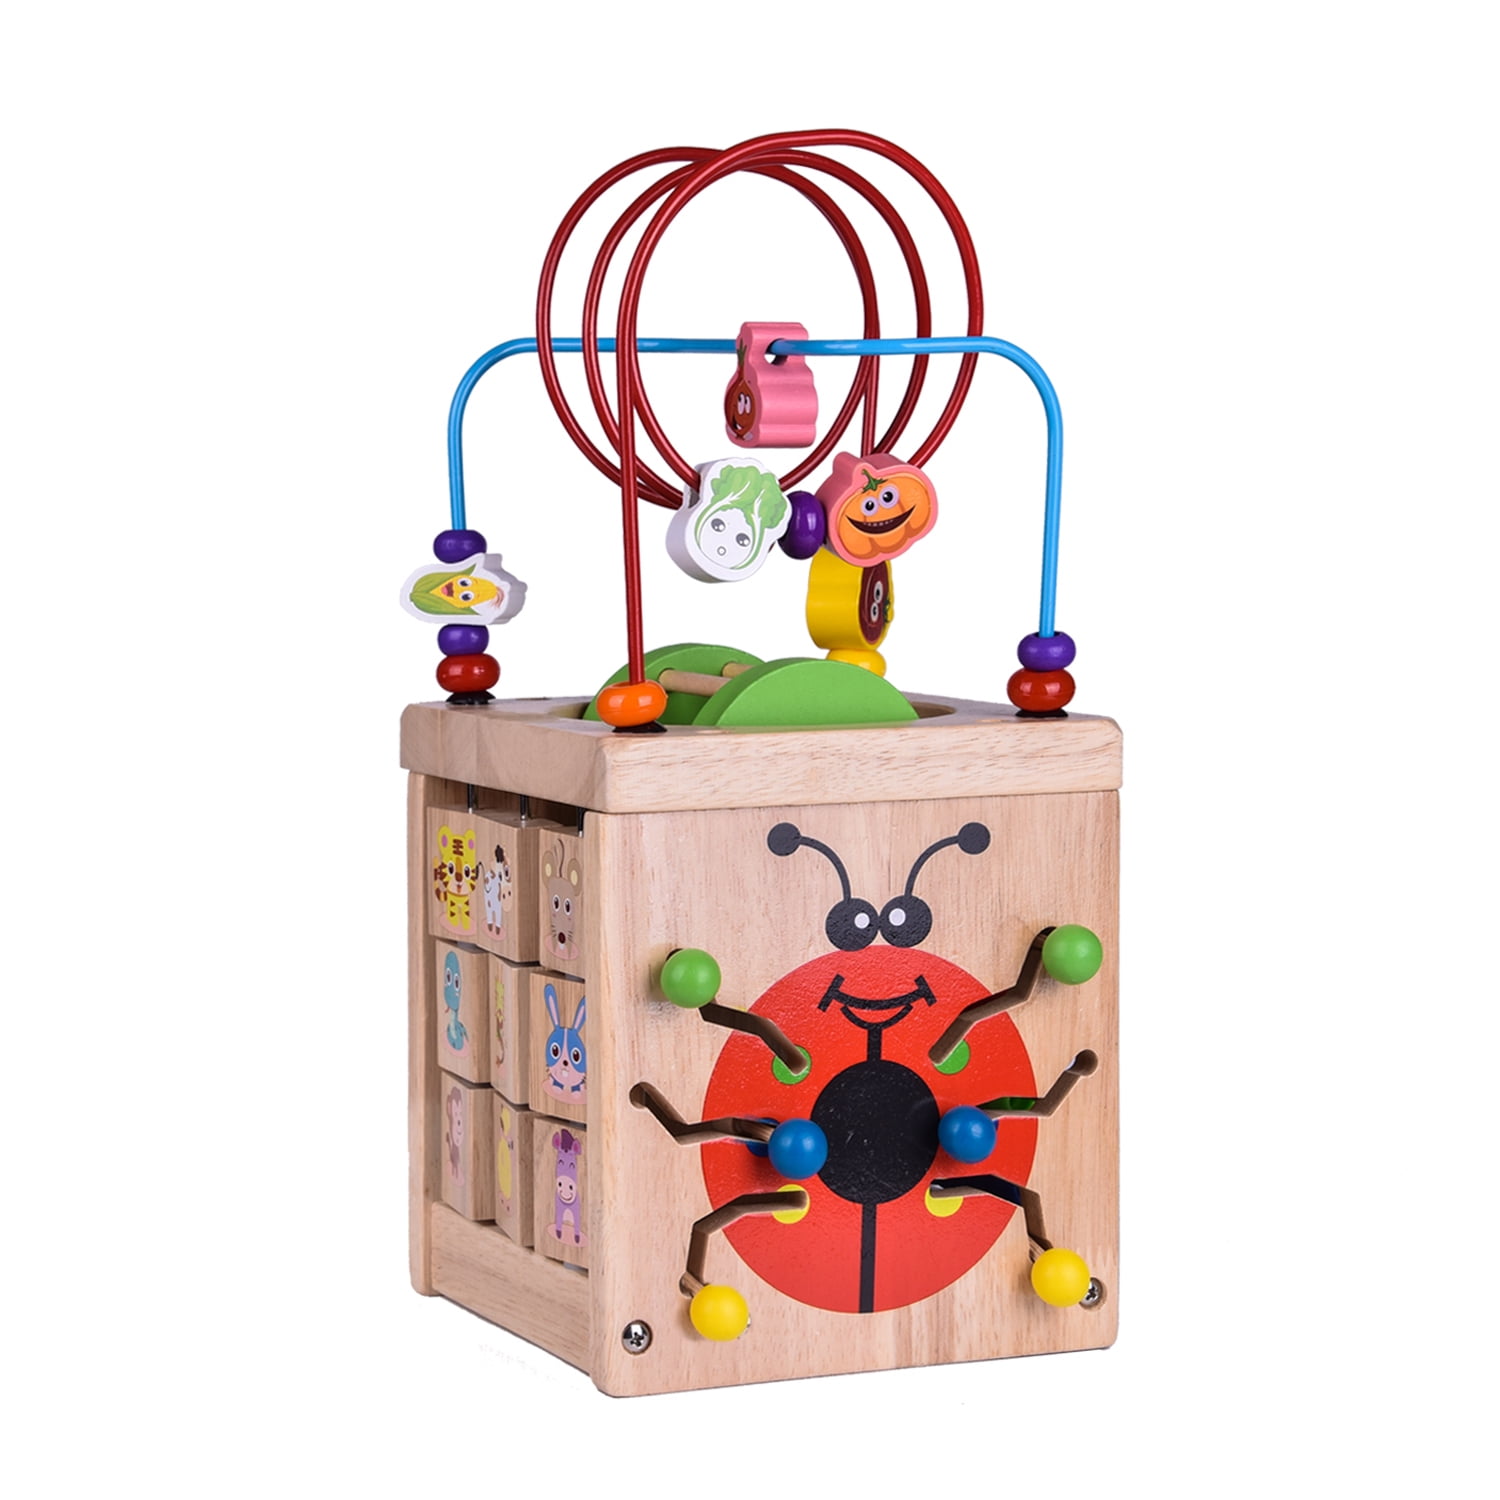 Giraffe Wooden Bead Maze Activity Center Educational Toy for Baby & Toddler 